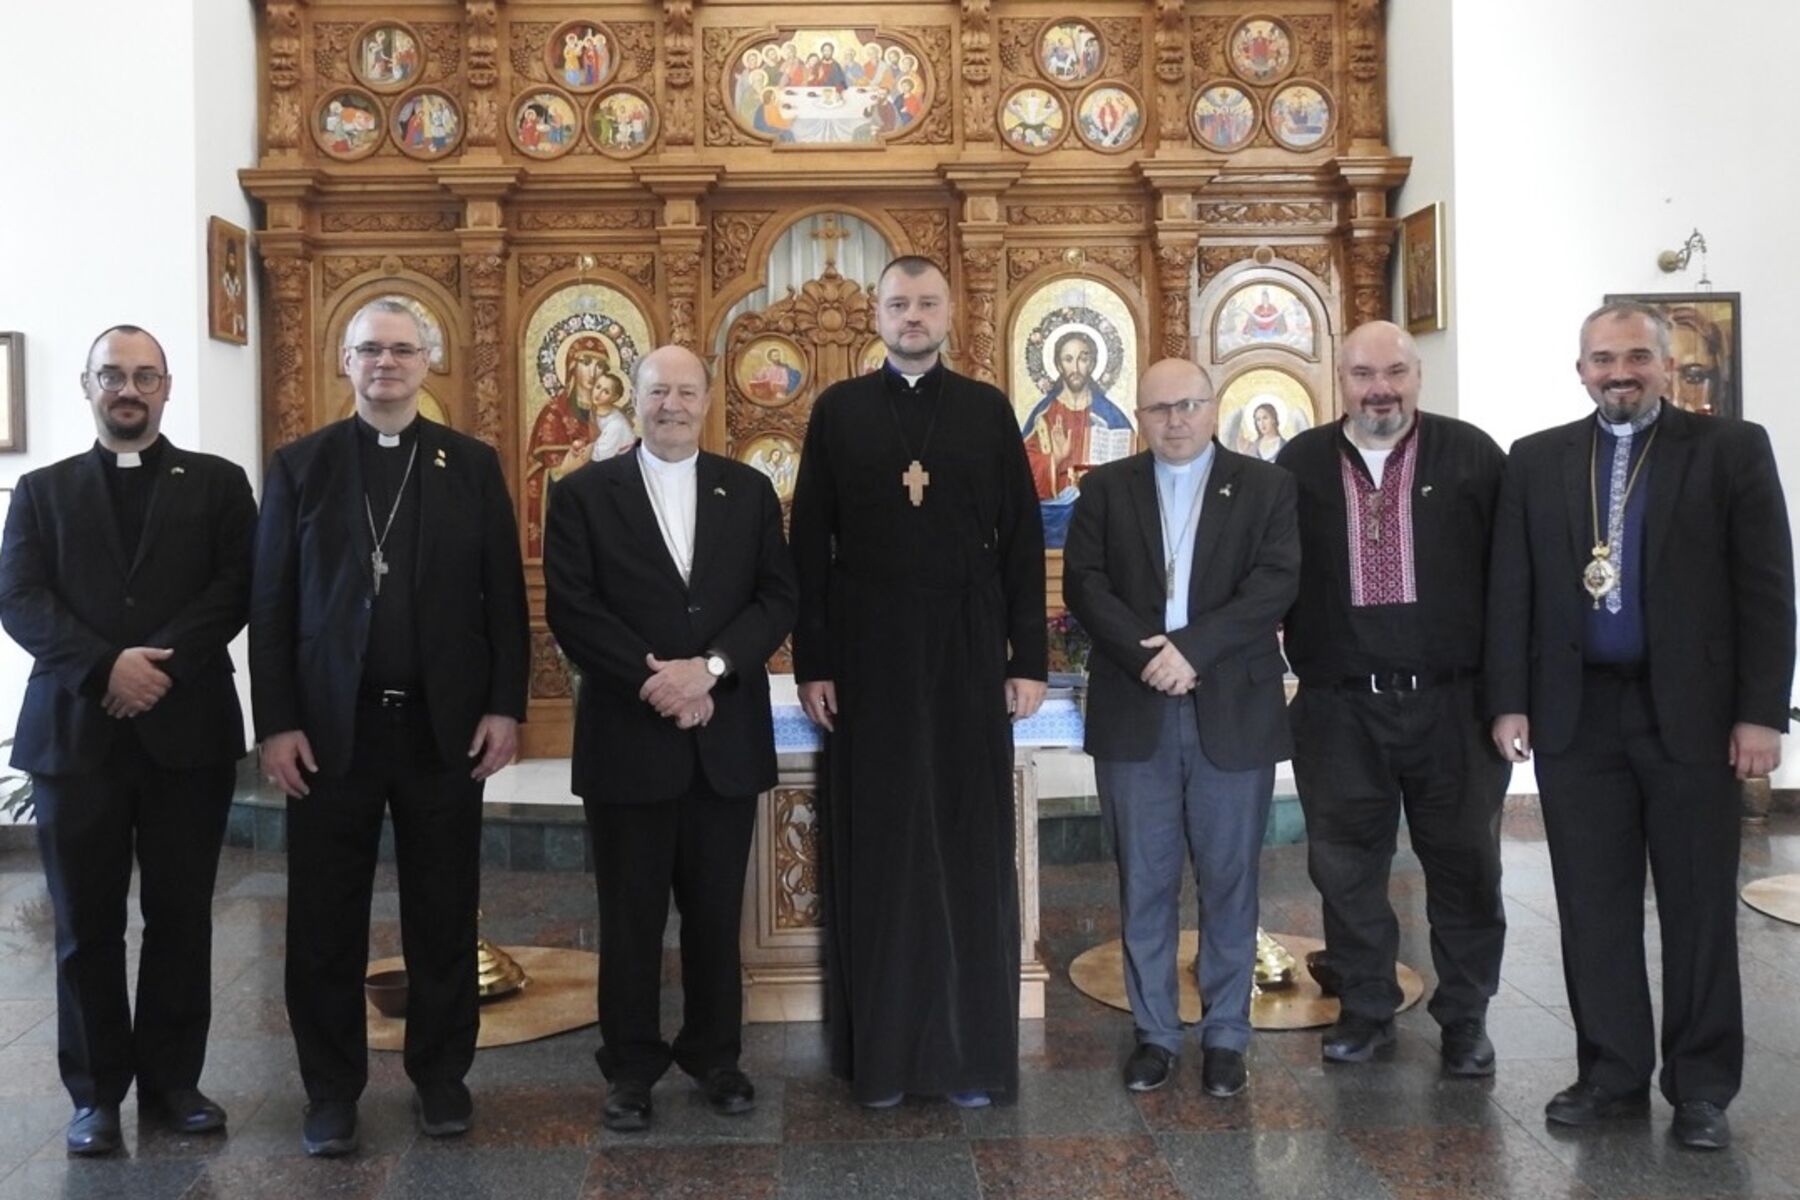 The delegation of Australian Bishops and laypeople visited Ukraine